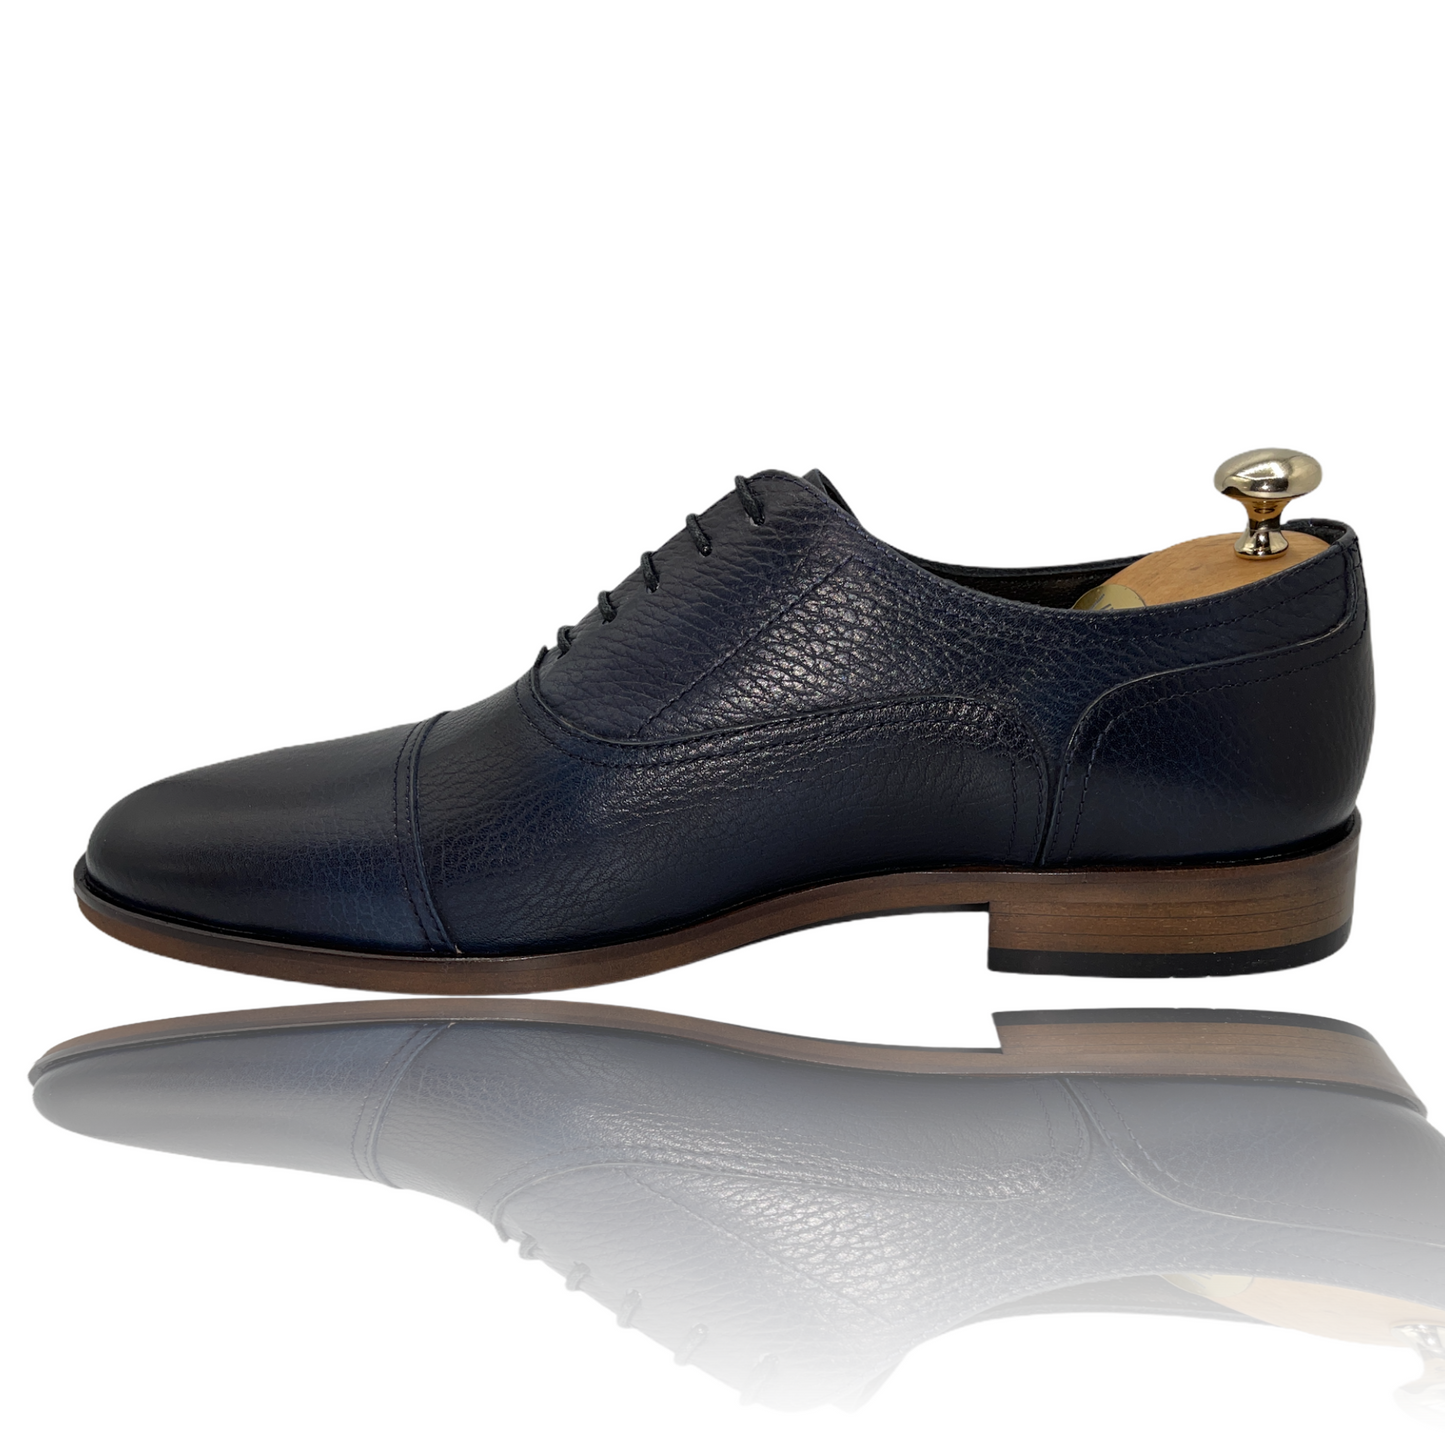 The Largo Dark Blue Leather Cap Toe Oxford Shoe Final Sale!